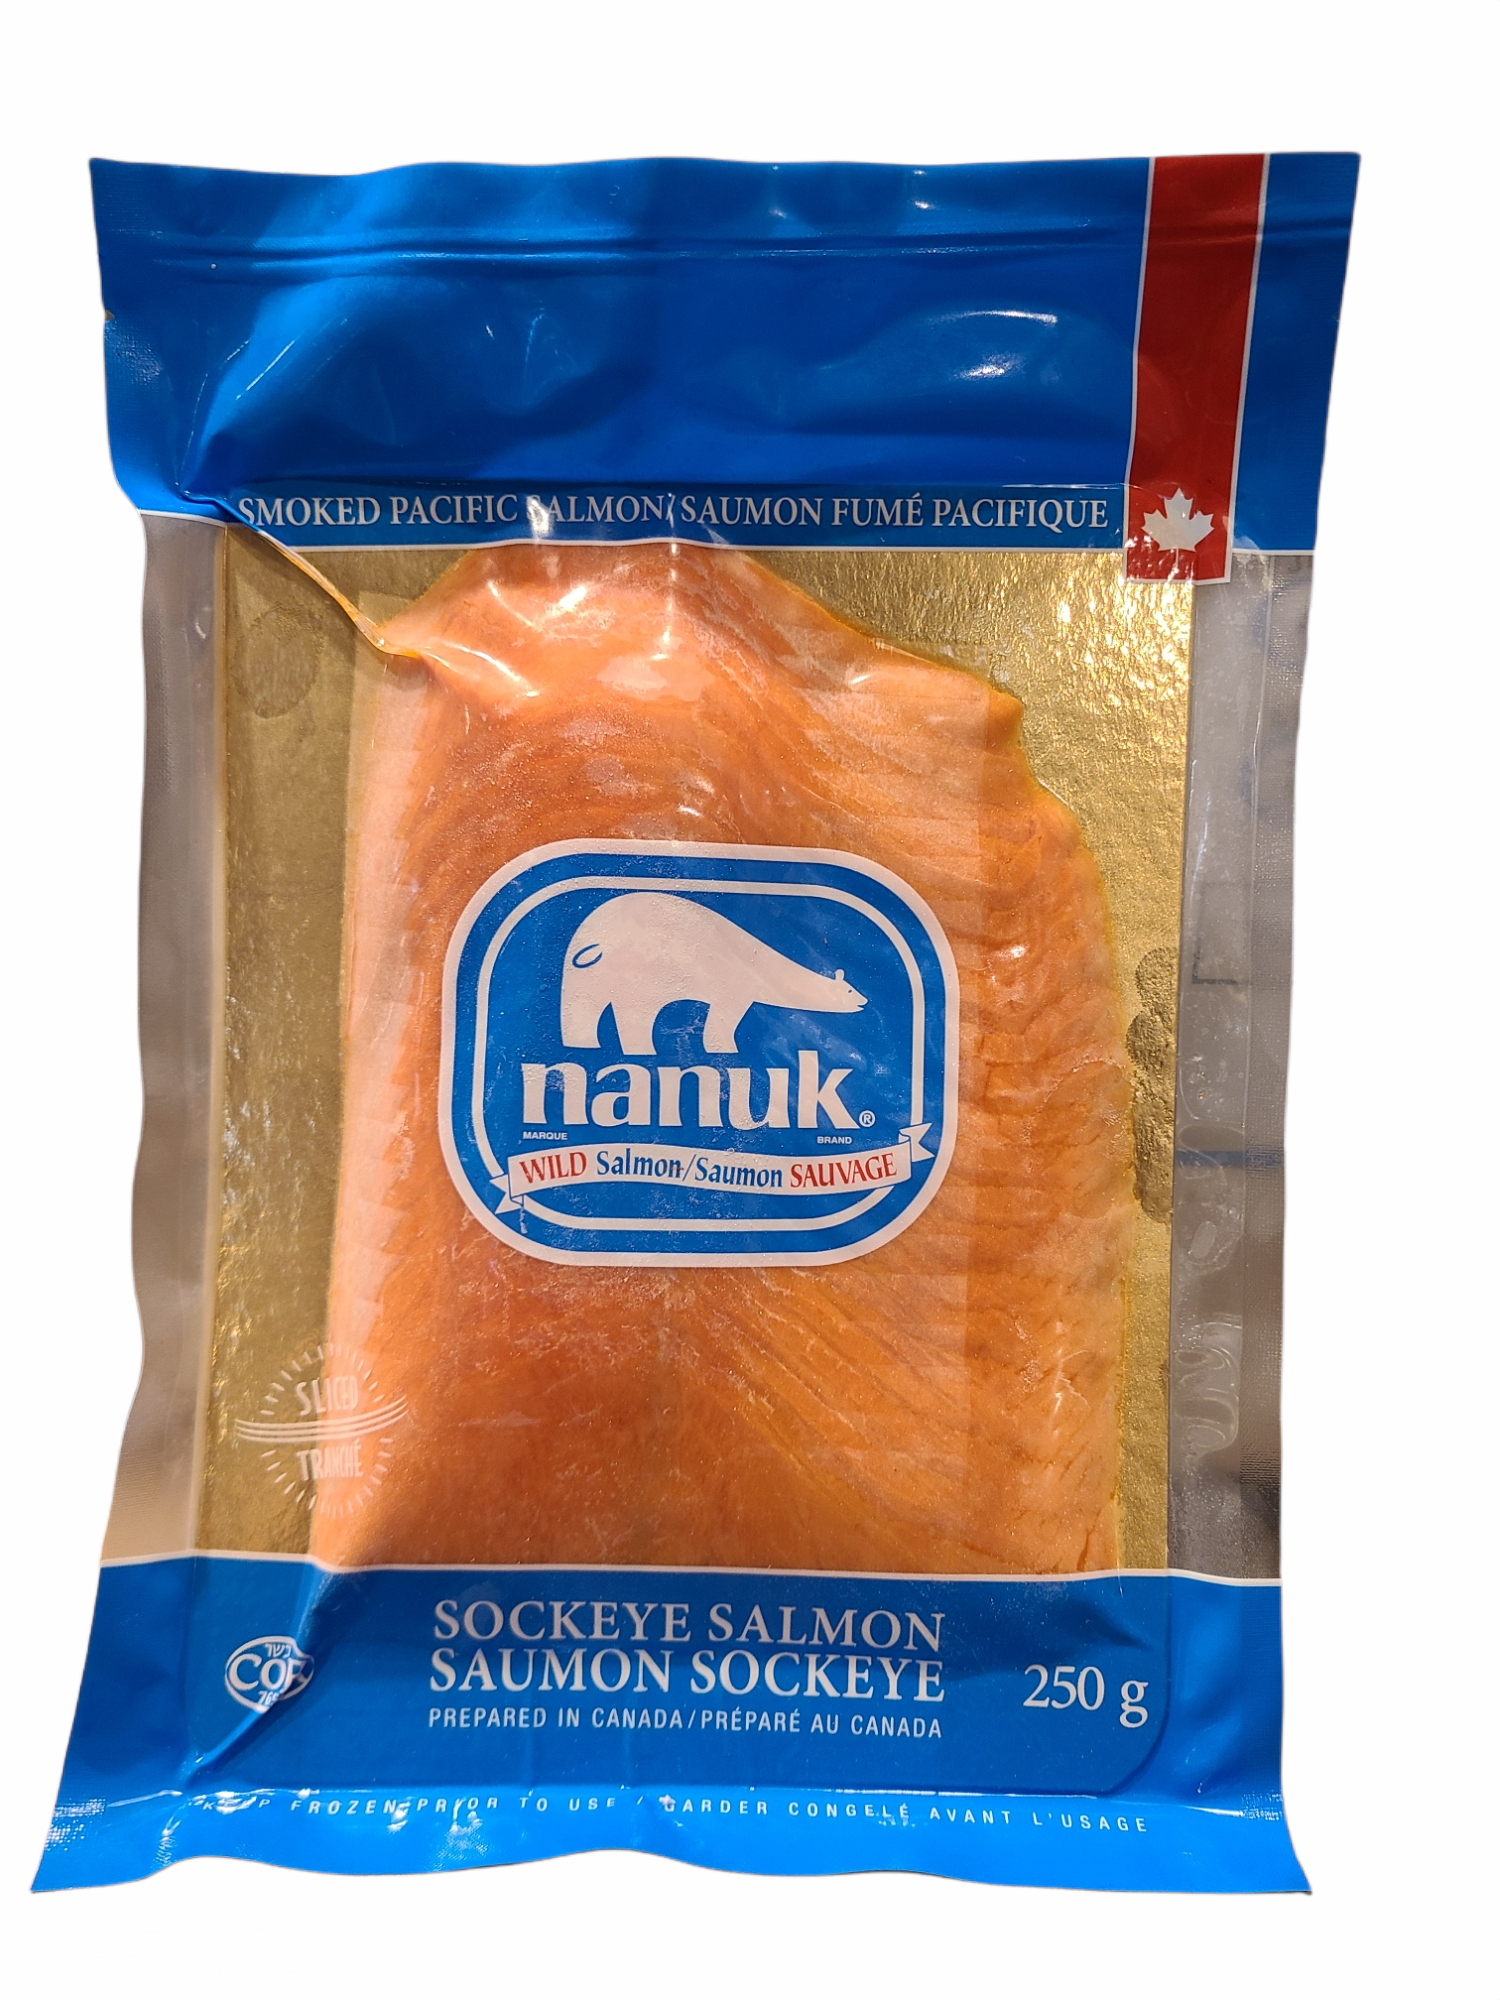 Smoked Sockeye Salmon / NANUK